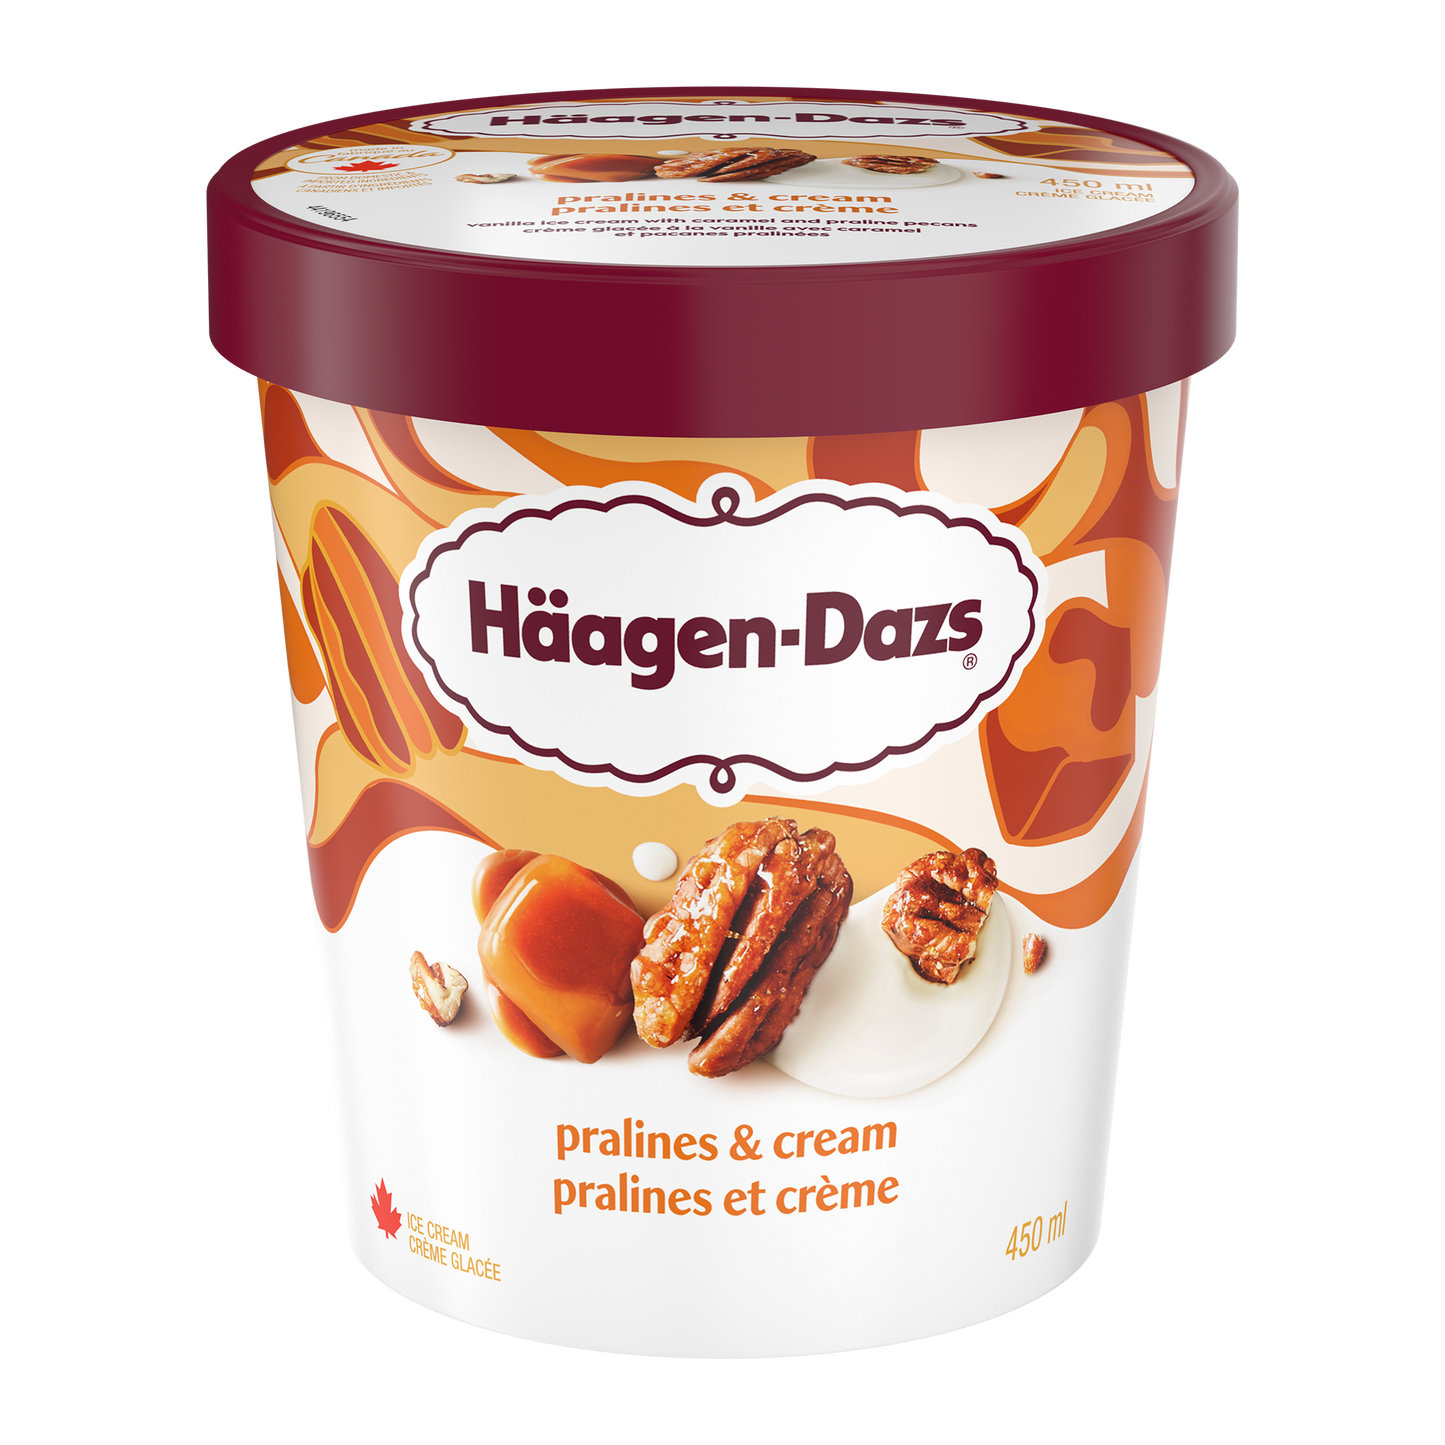 Haagen-Dazs Pralines & Cream